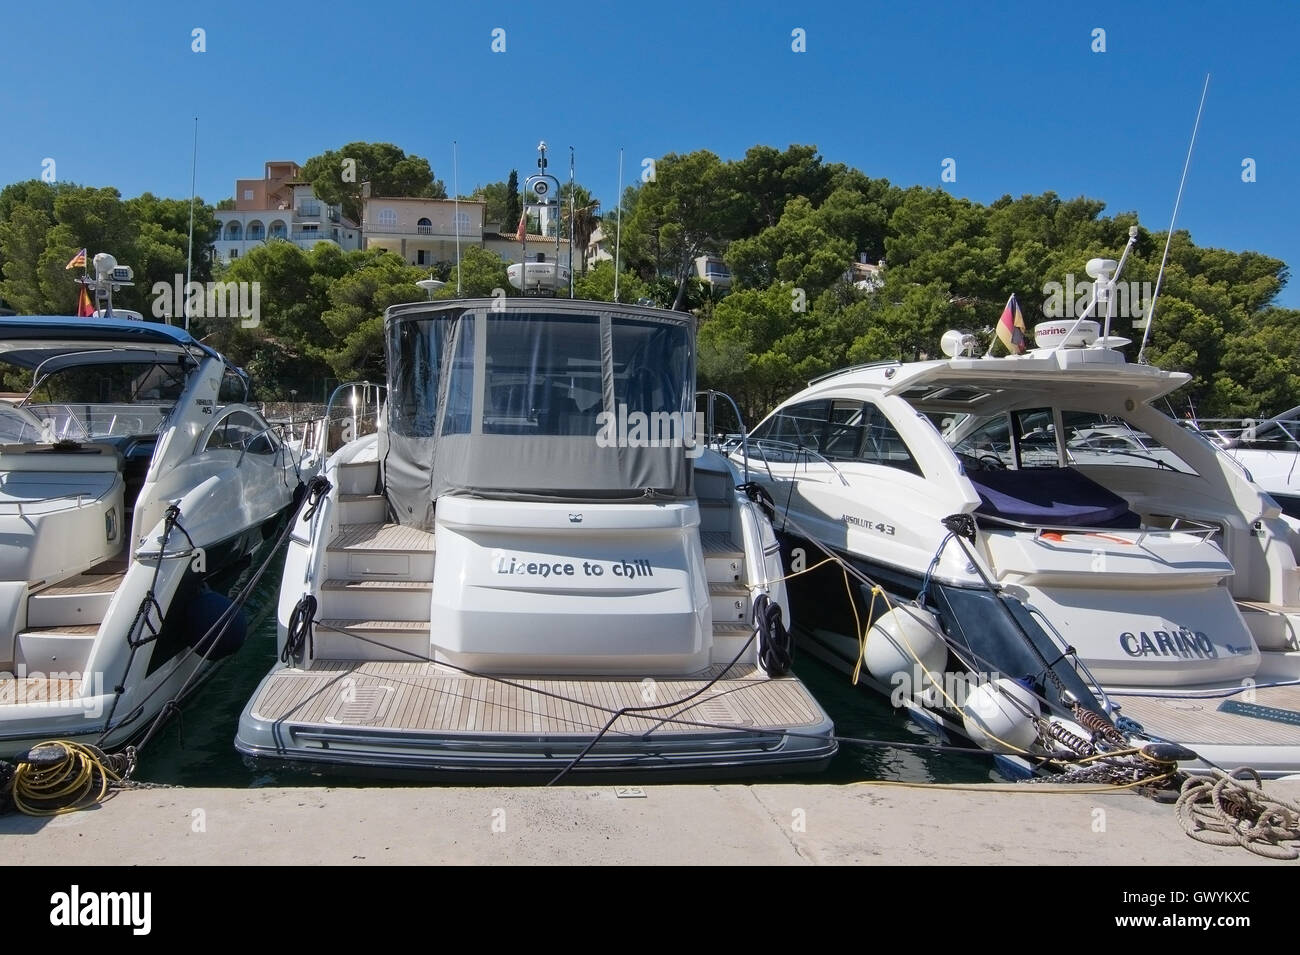 Boats in the marina in Santa Ponsa Nautic Club on a sunny summer day on September 3, 2016 in Santa Ponsa, Mallorca, Spain Stock Photo